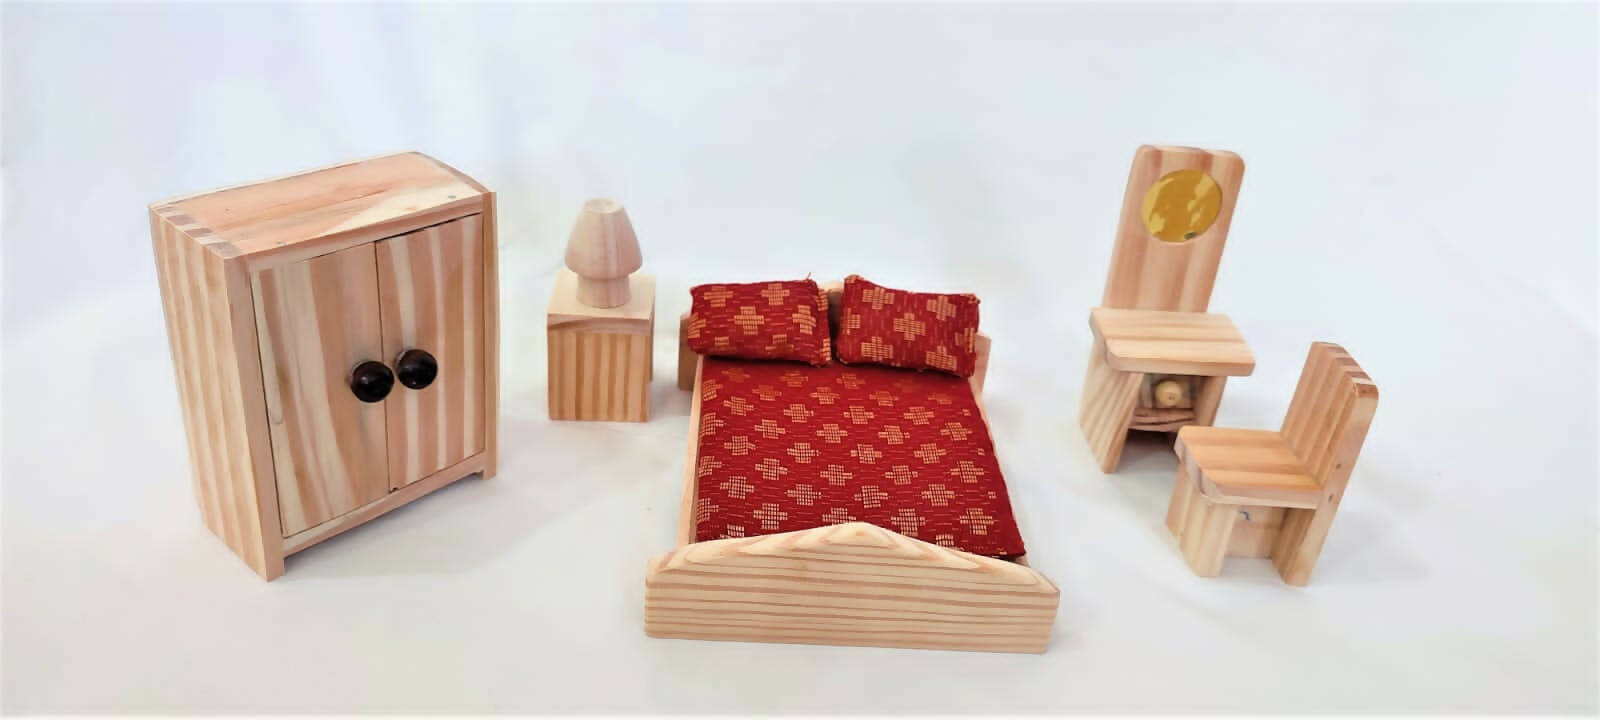 Wooden Simple Bedroom Toy - PyaraBaby